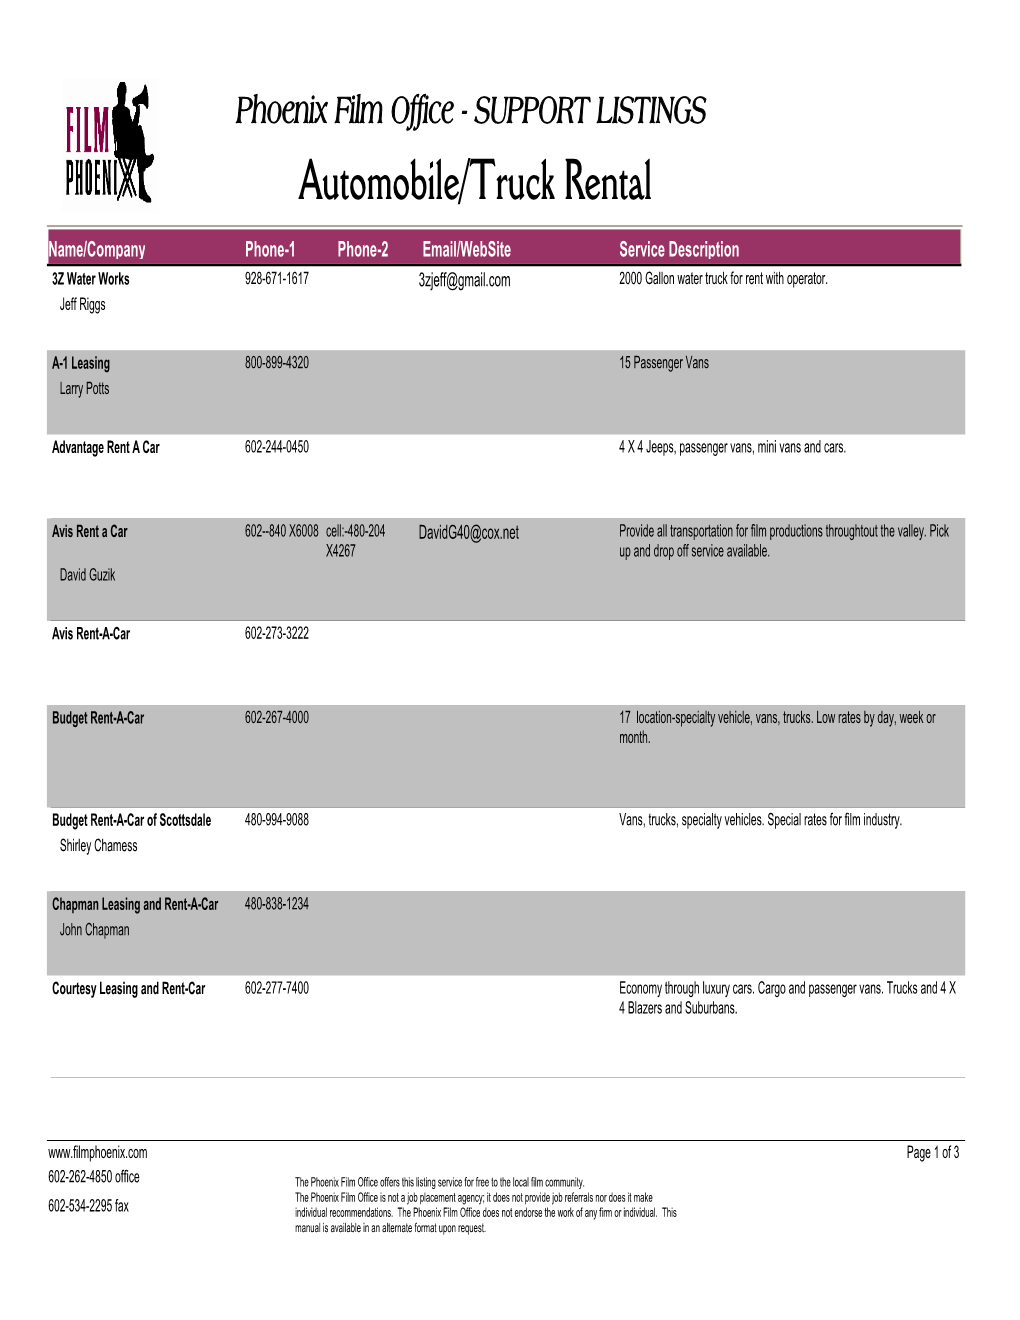 Phoenix Film Office - SUPPORT LISTINGS Automobile/Truck Rental